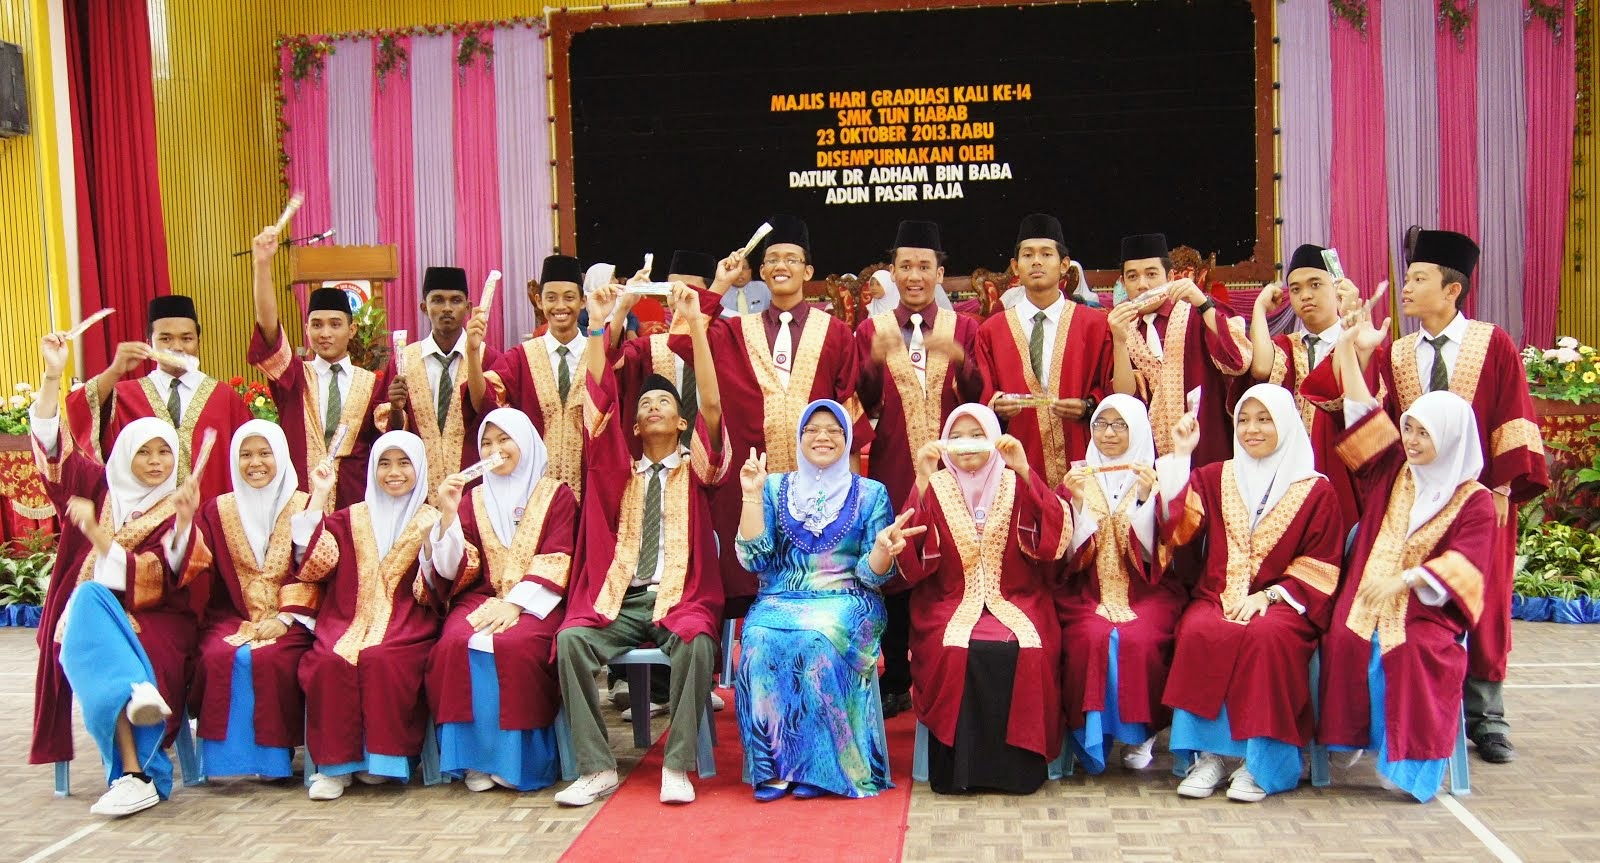 Classmates 2013